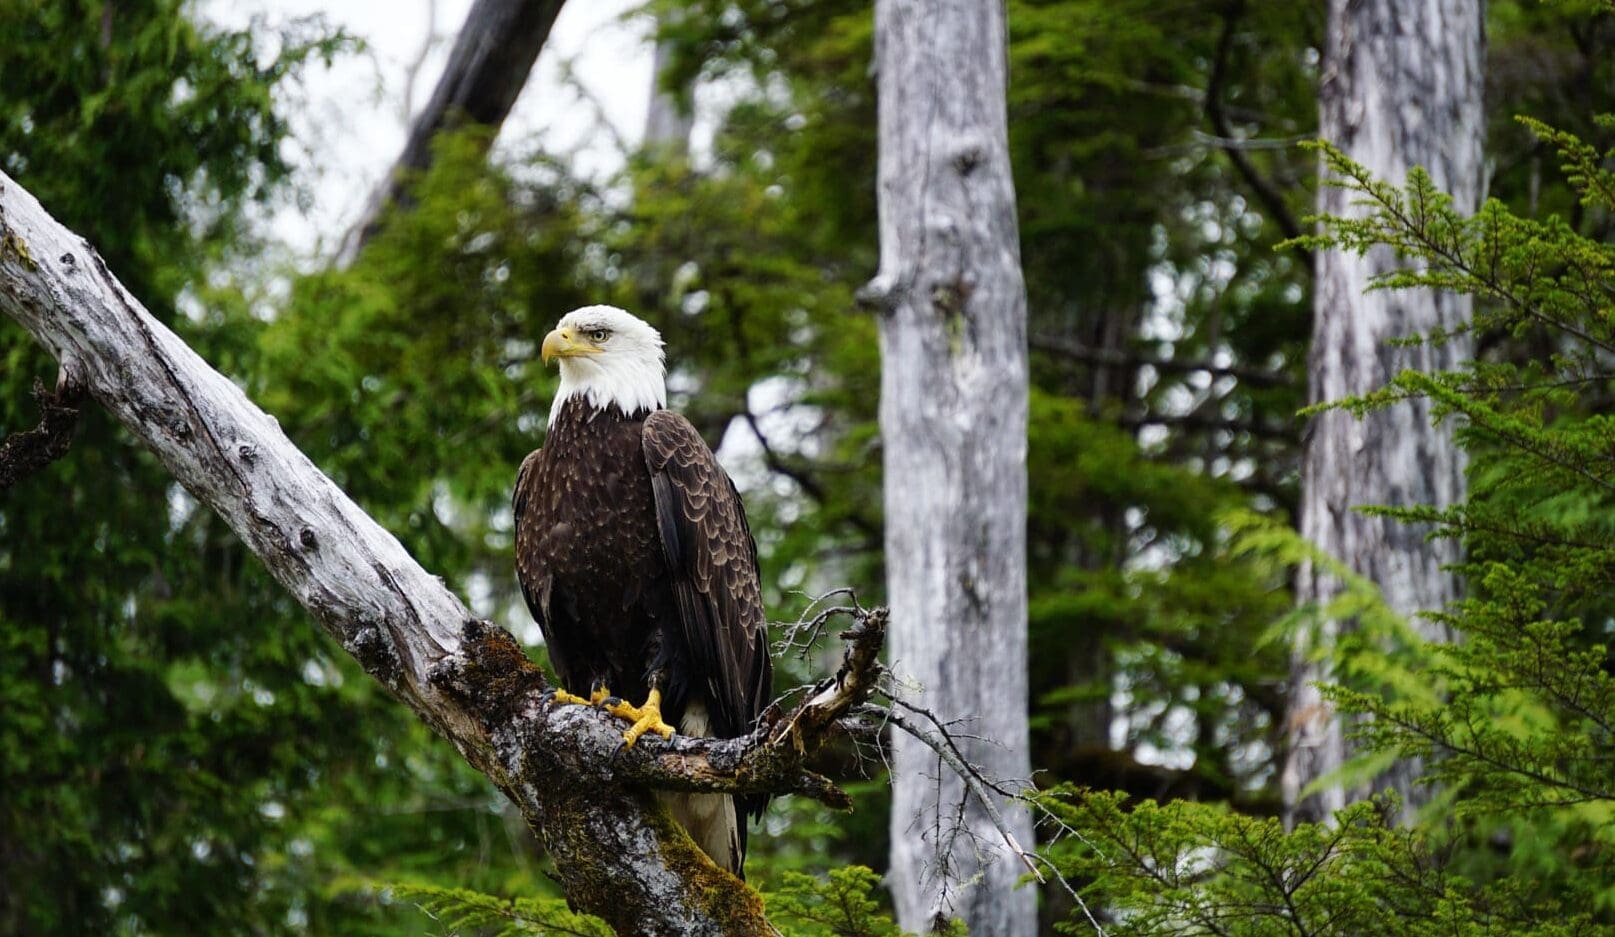 A Bald Eagle perched in a Cedar tree